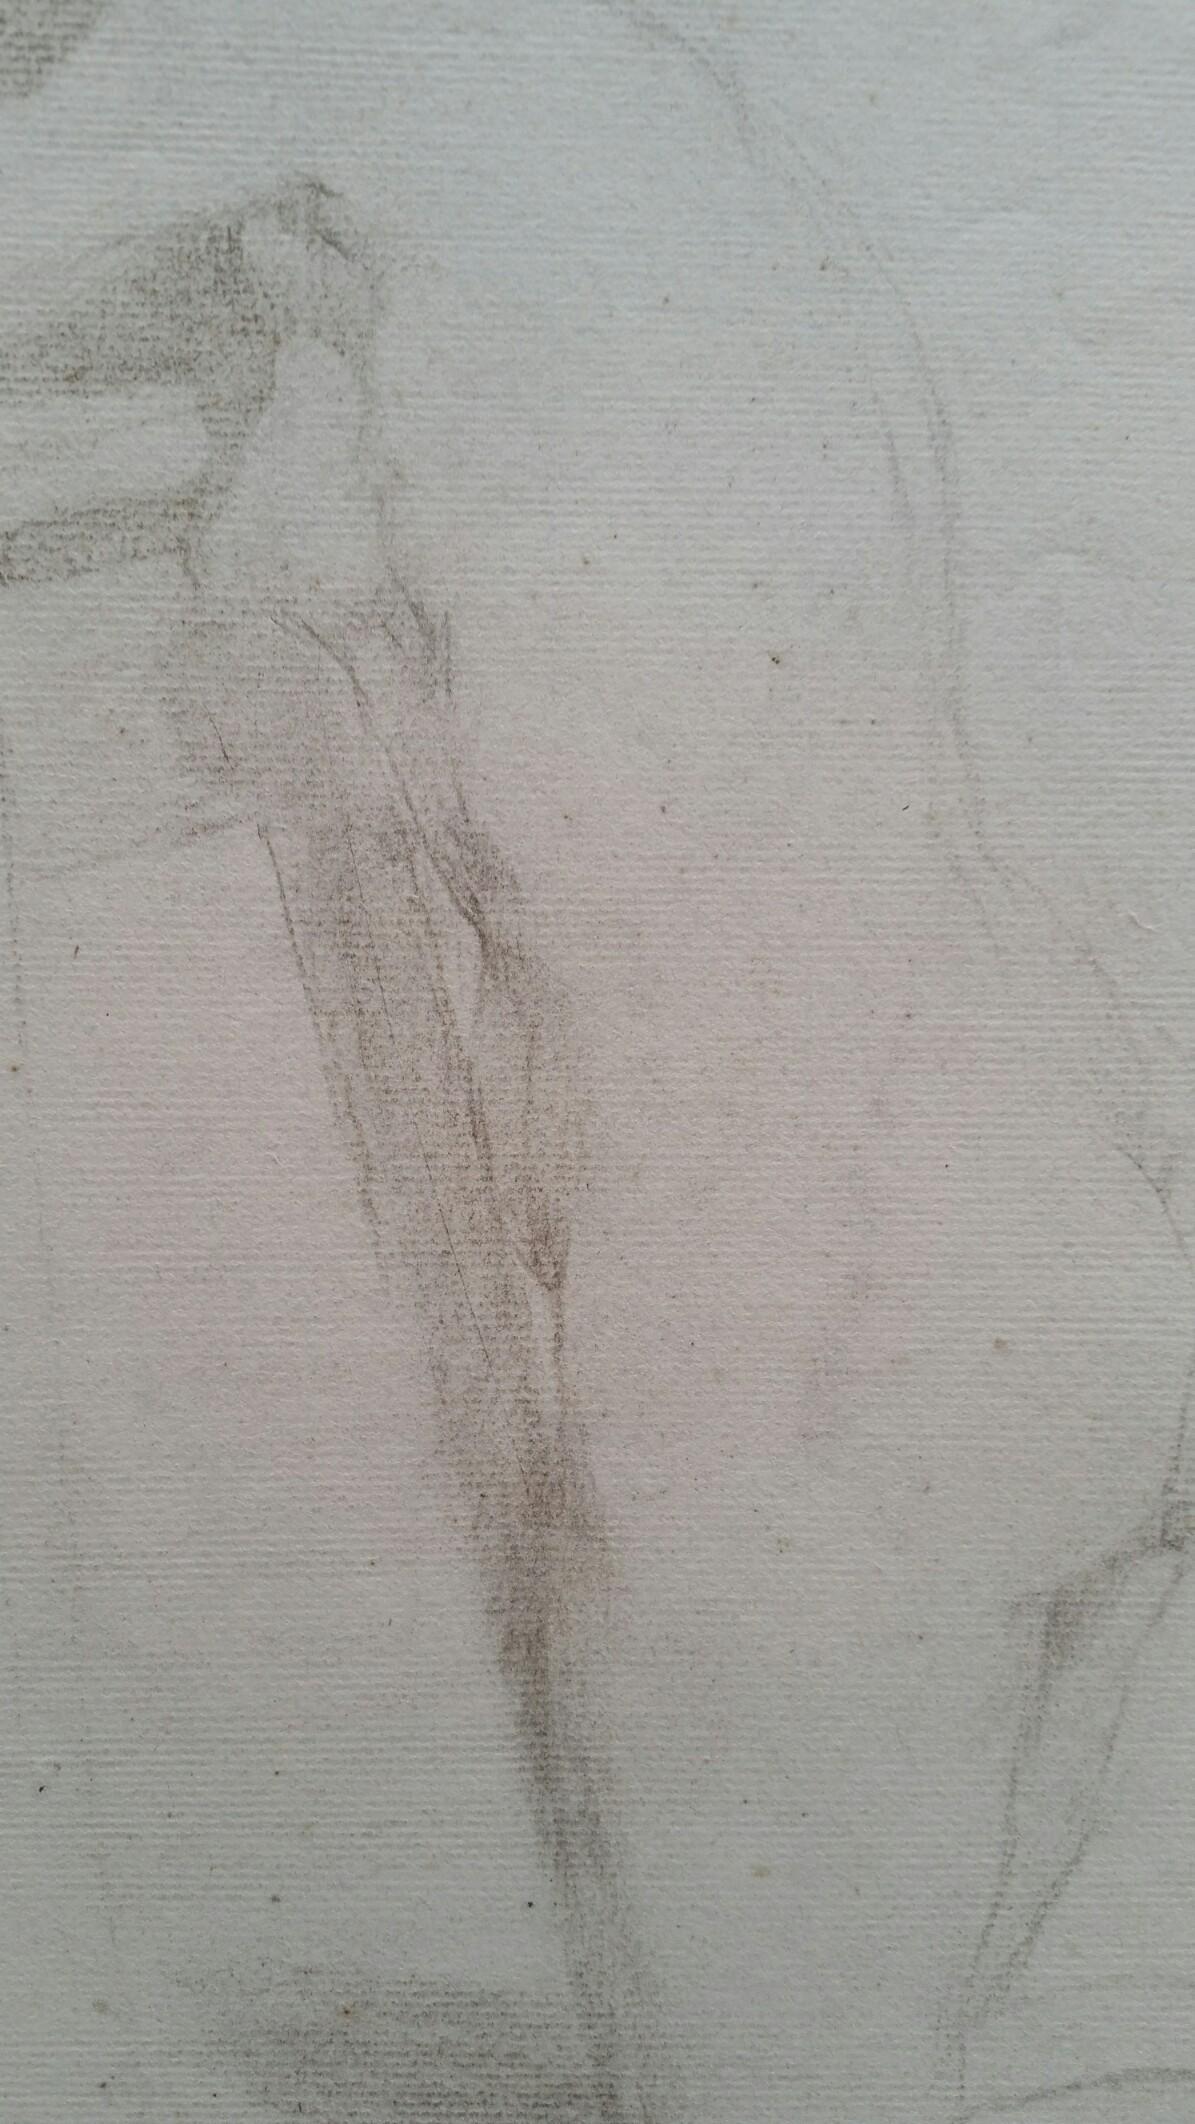 English Graphite Portrait Sketch of Female Nude, Kneeling For Sale 7